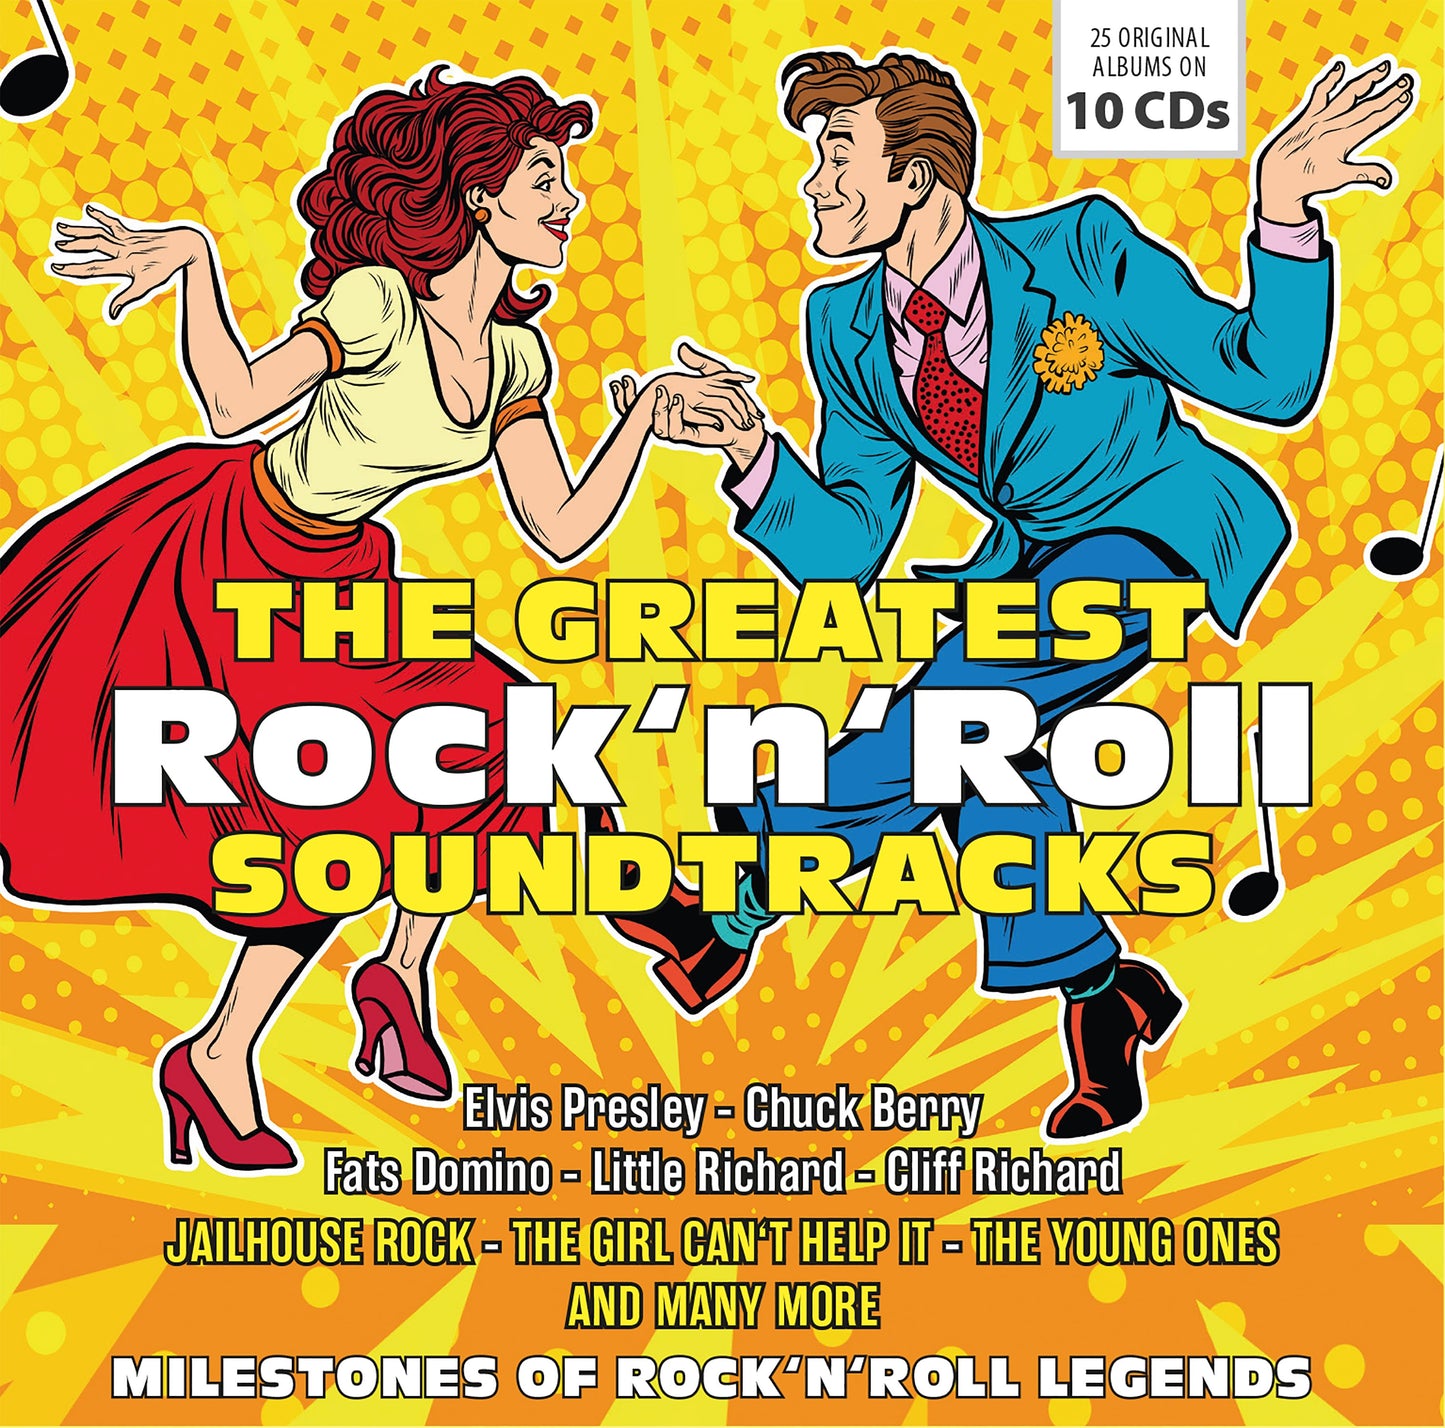 THE GREATEST ROCK 'N' ROLL SOUNDTRACKS (10 CDS)